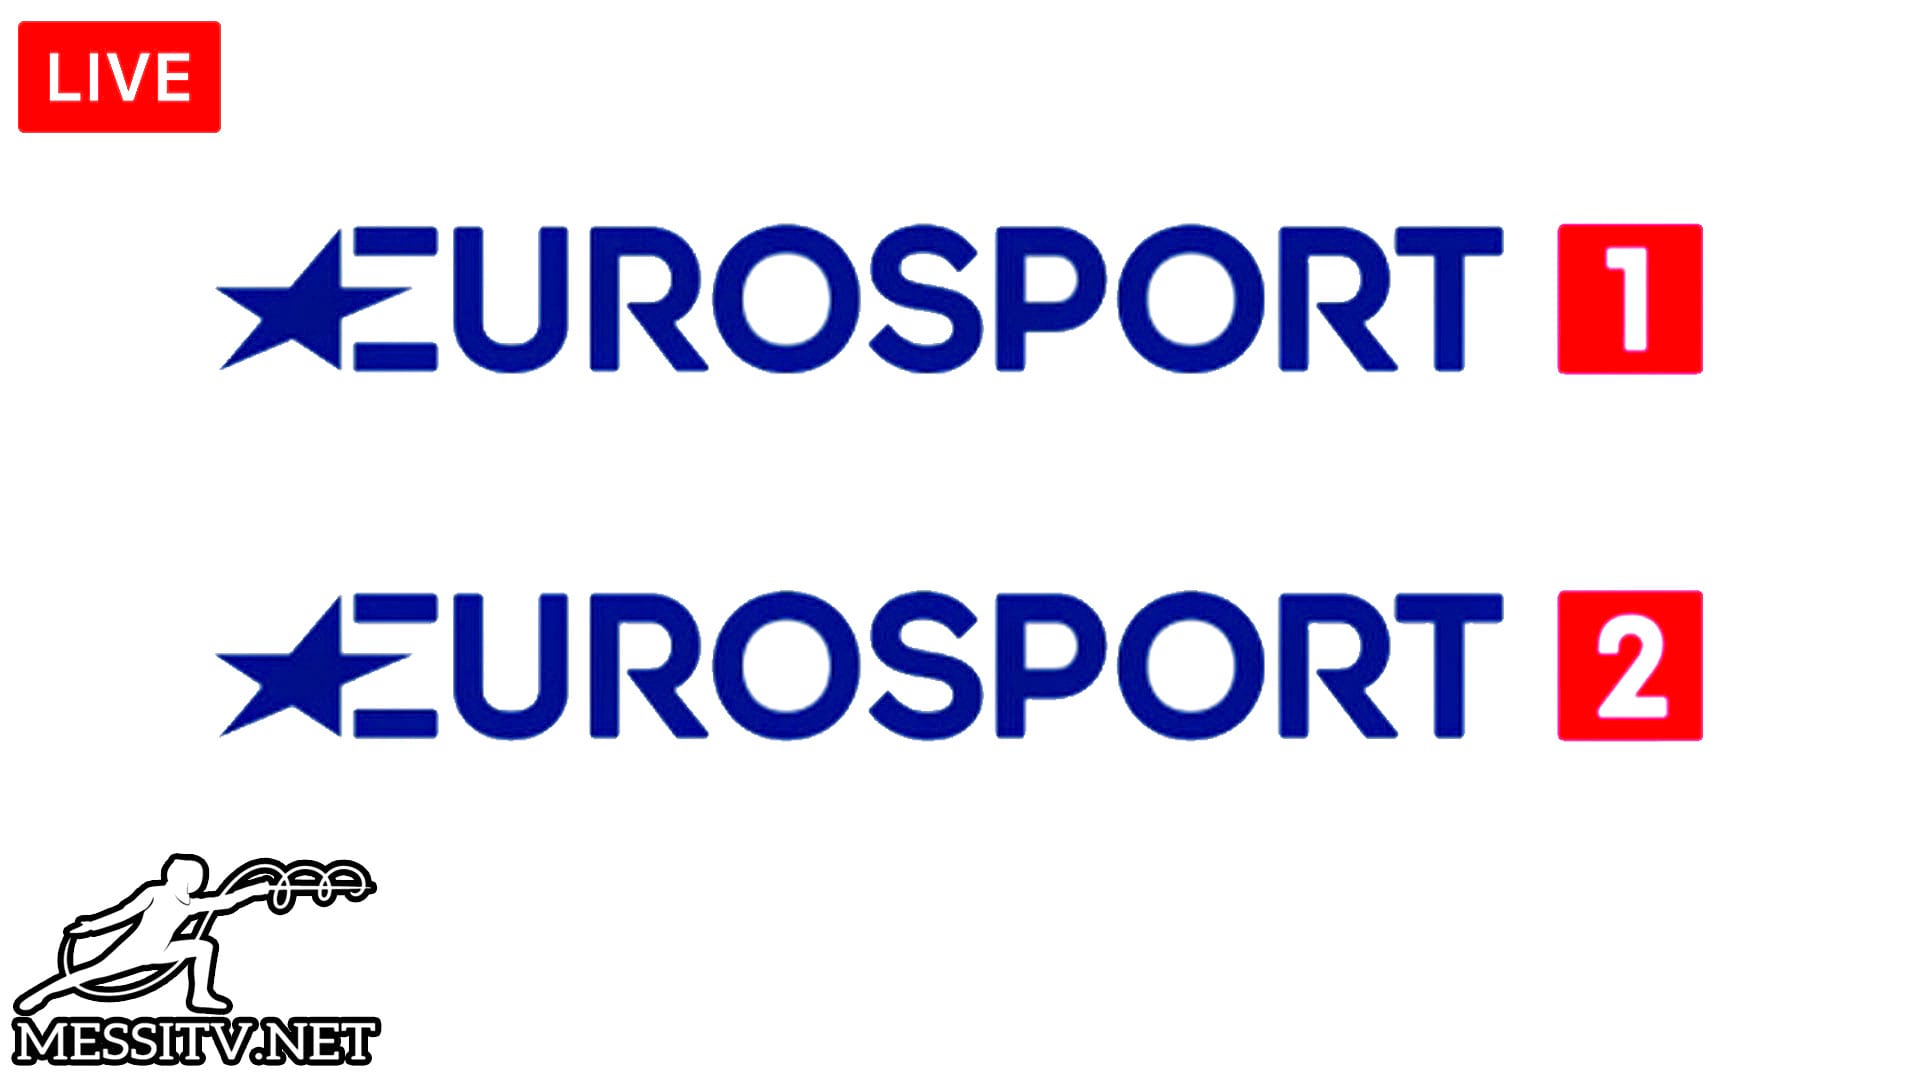 Eurosport 1 HD uk, Eurosport 2 HD France, Eurosport 1 france, Eurosport 2 UK, Eurosport 1 Deutschland, Eurosport 2 HD Extra Deutschland, Eurosport 1 Polska, Eurosport 2 Polska, Eurosport 1 Italia, Eurosport 2 Italia, watch UK tv live online